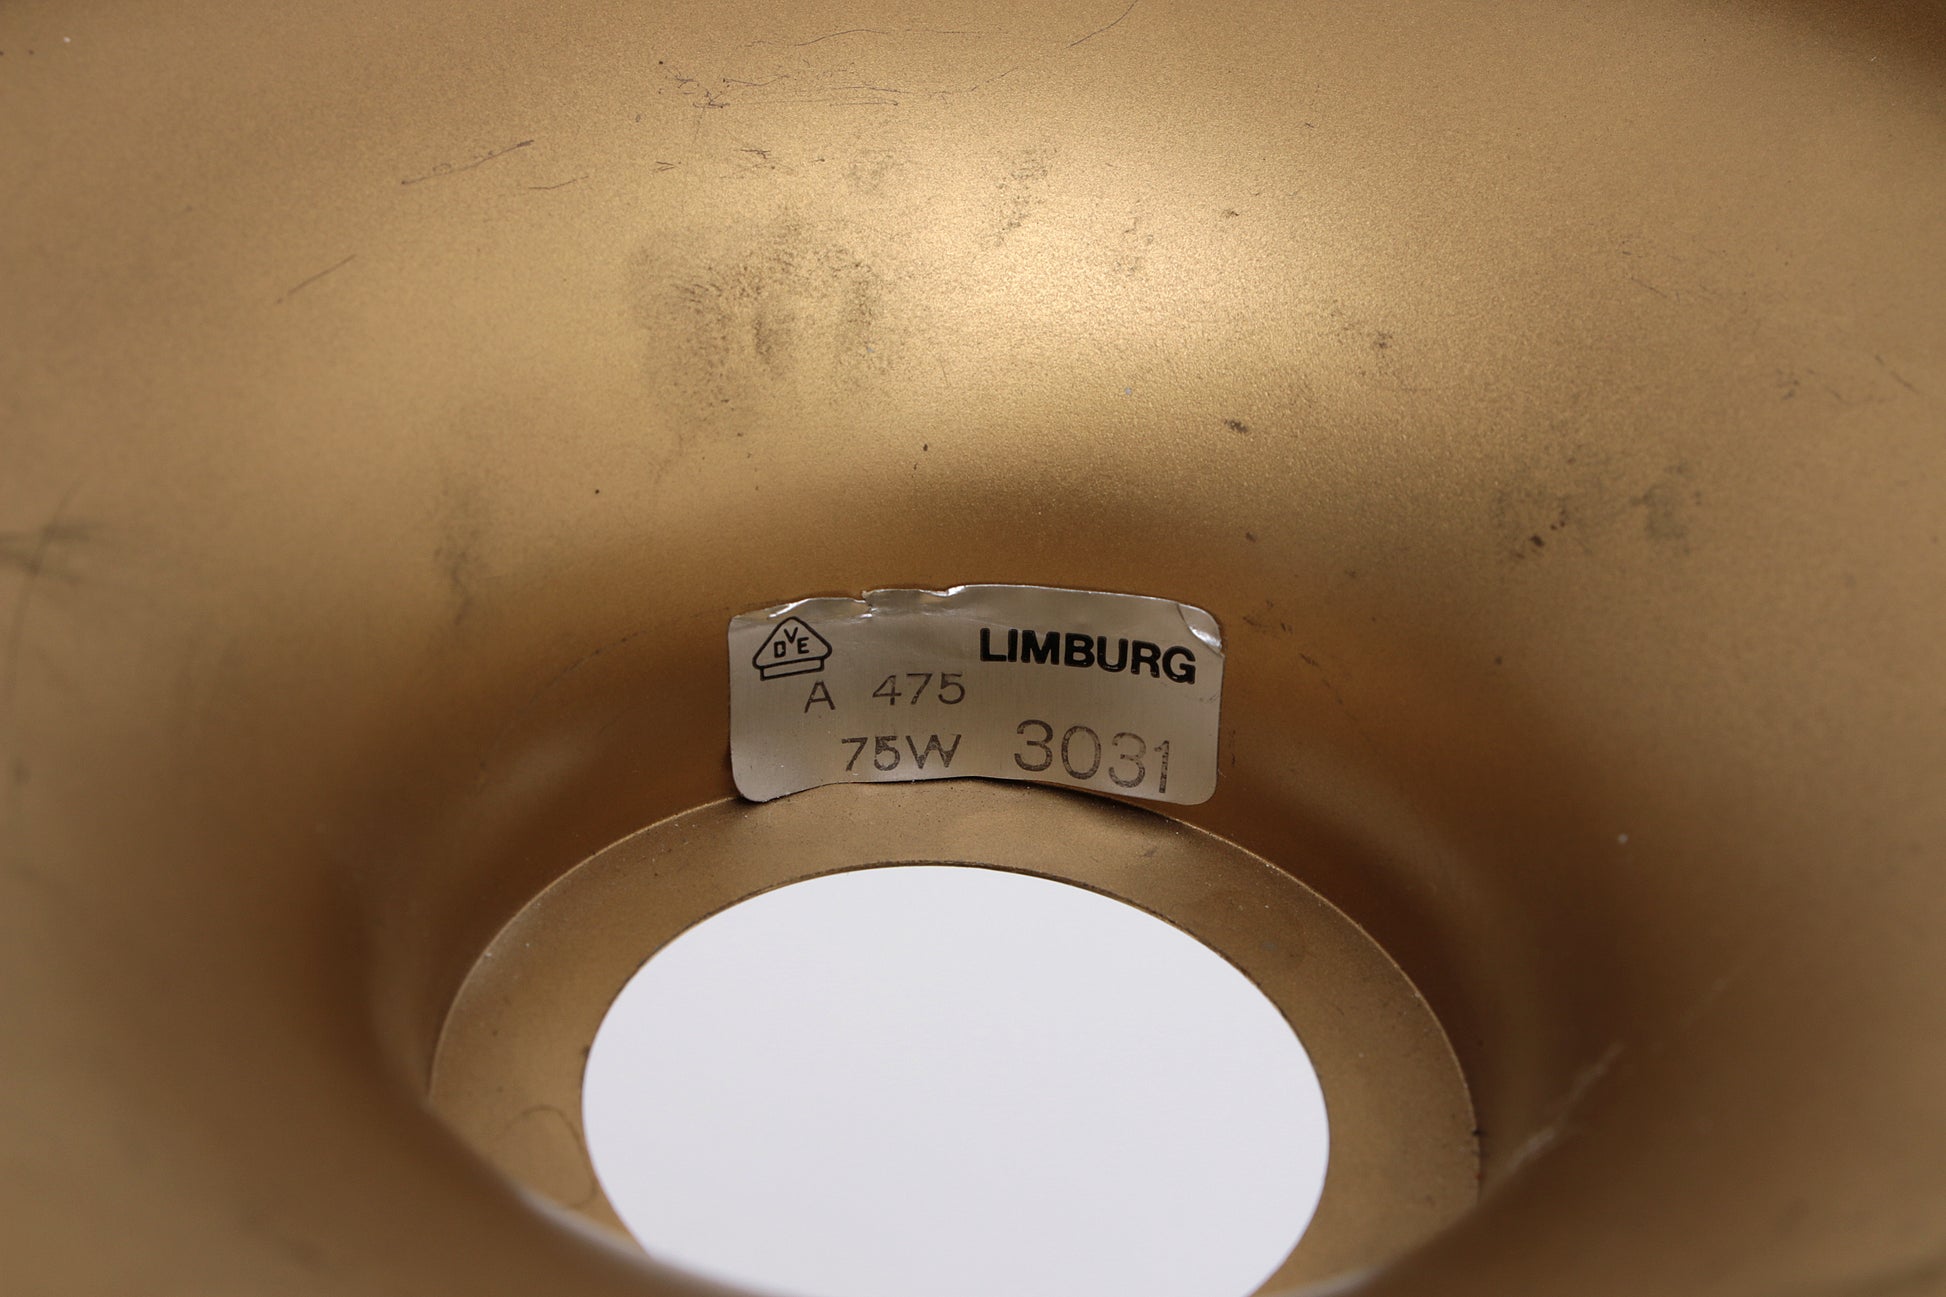 Kleine ronde plafonniere van Muranoglas uit Limburg, Duitsland, jaren 70